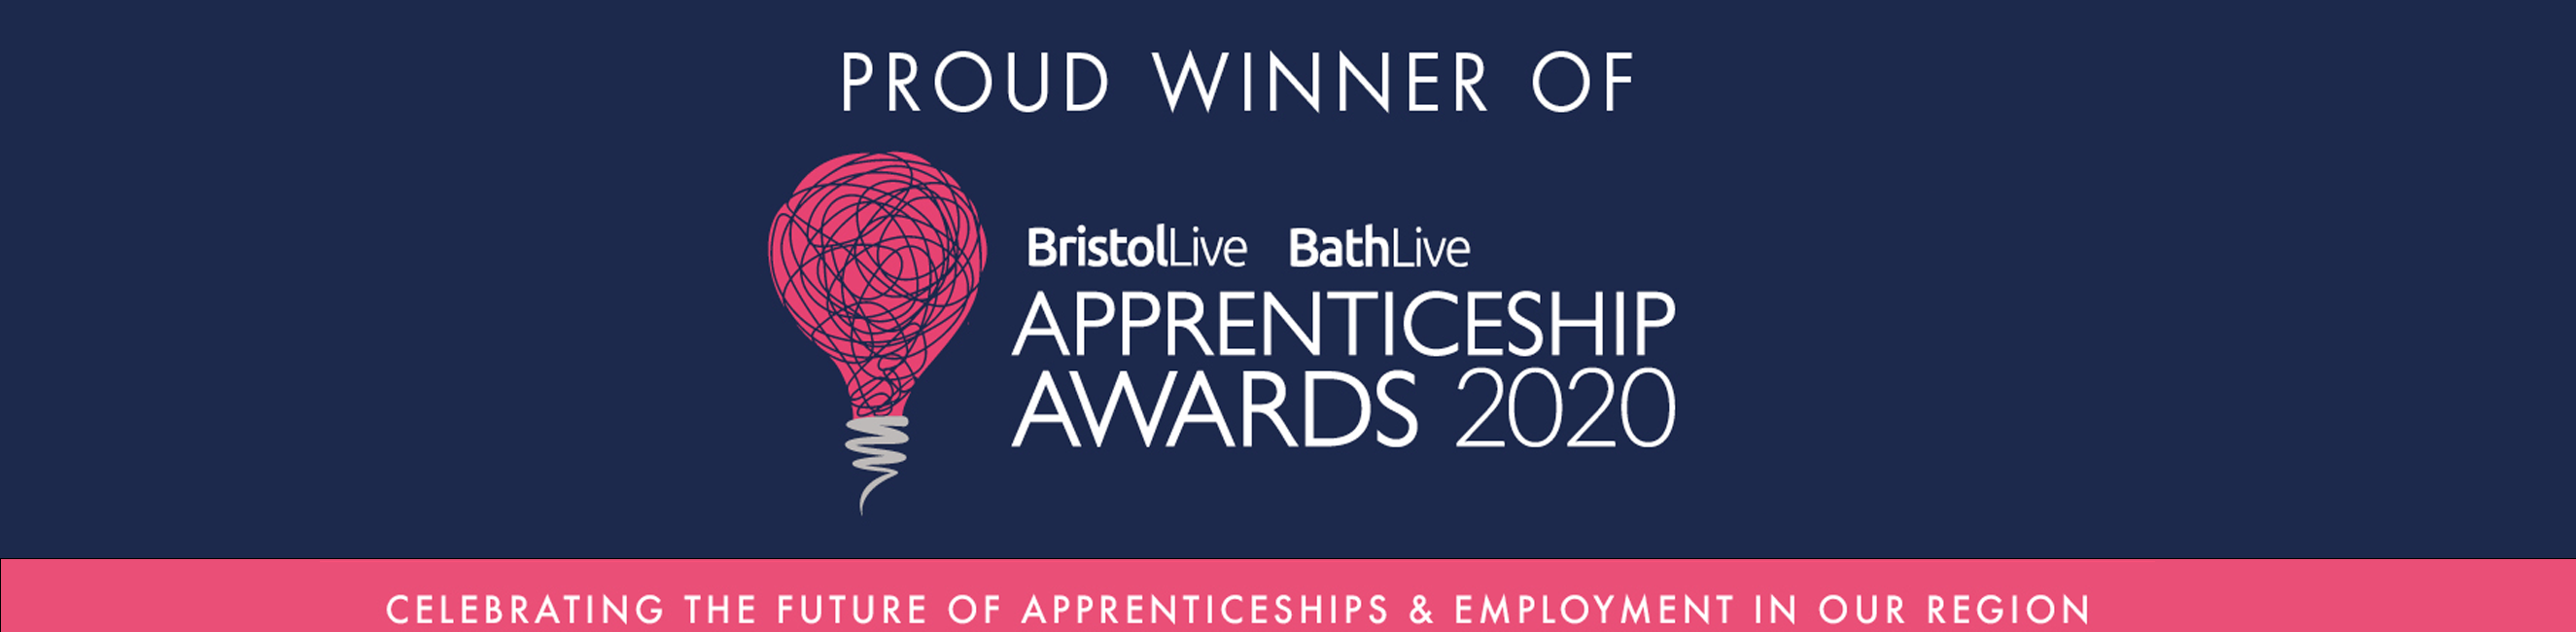 Bristol and Bath Apprenticeship Winners, Leading Provider